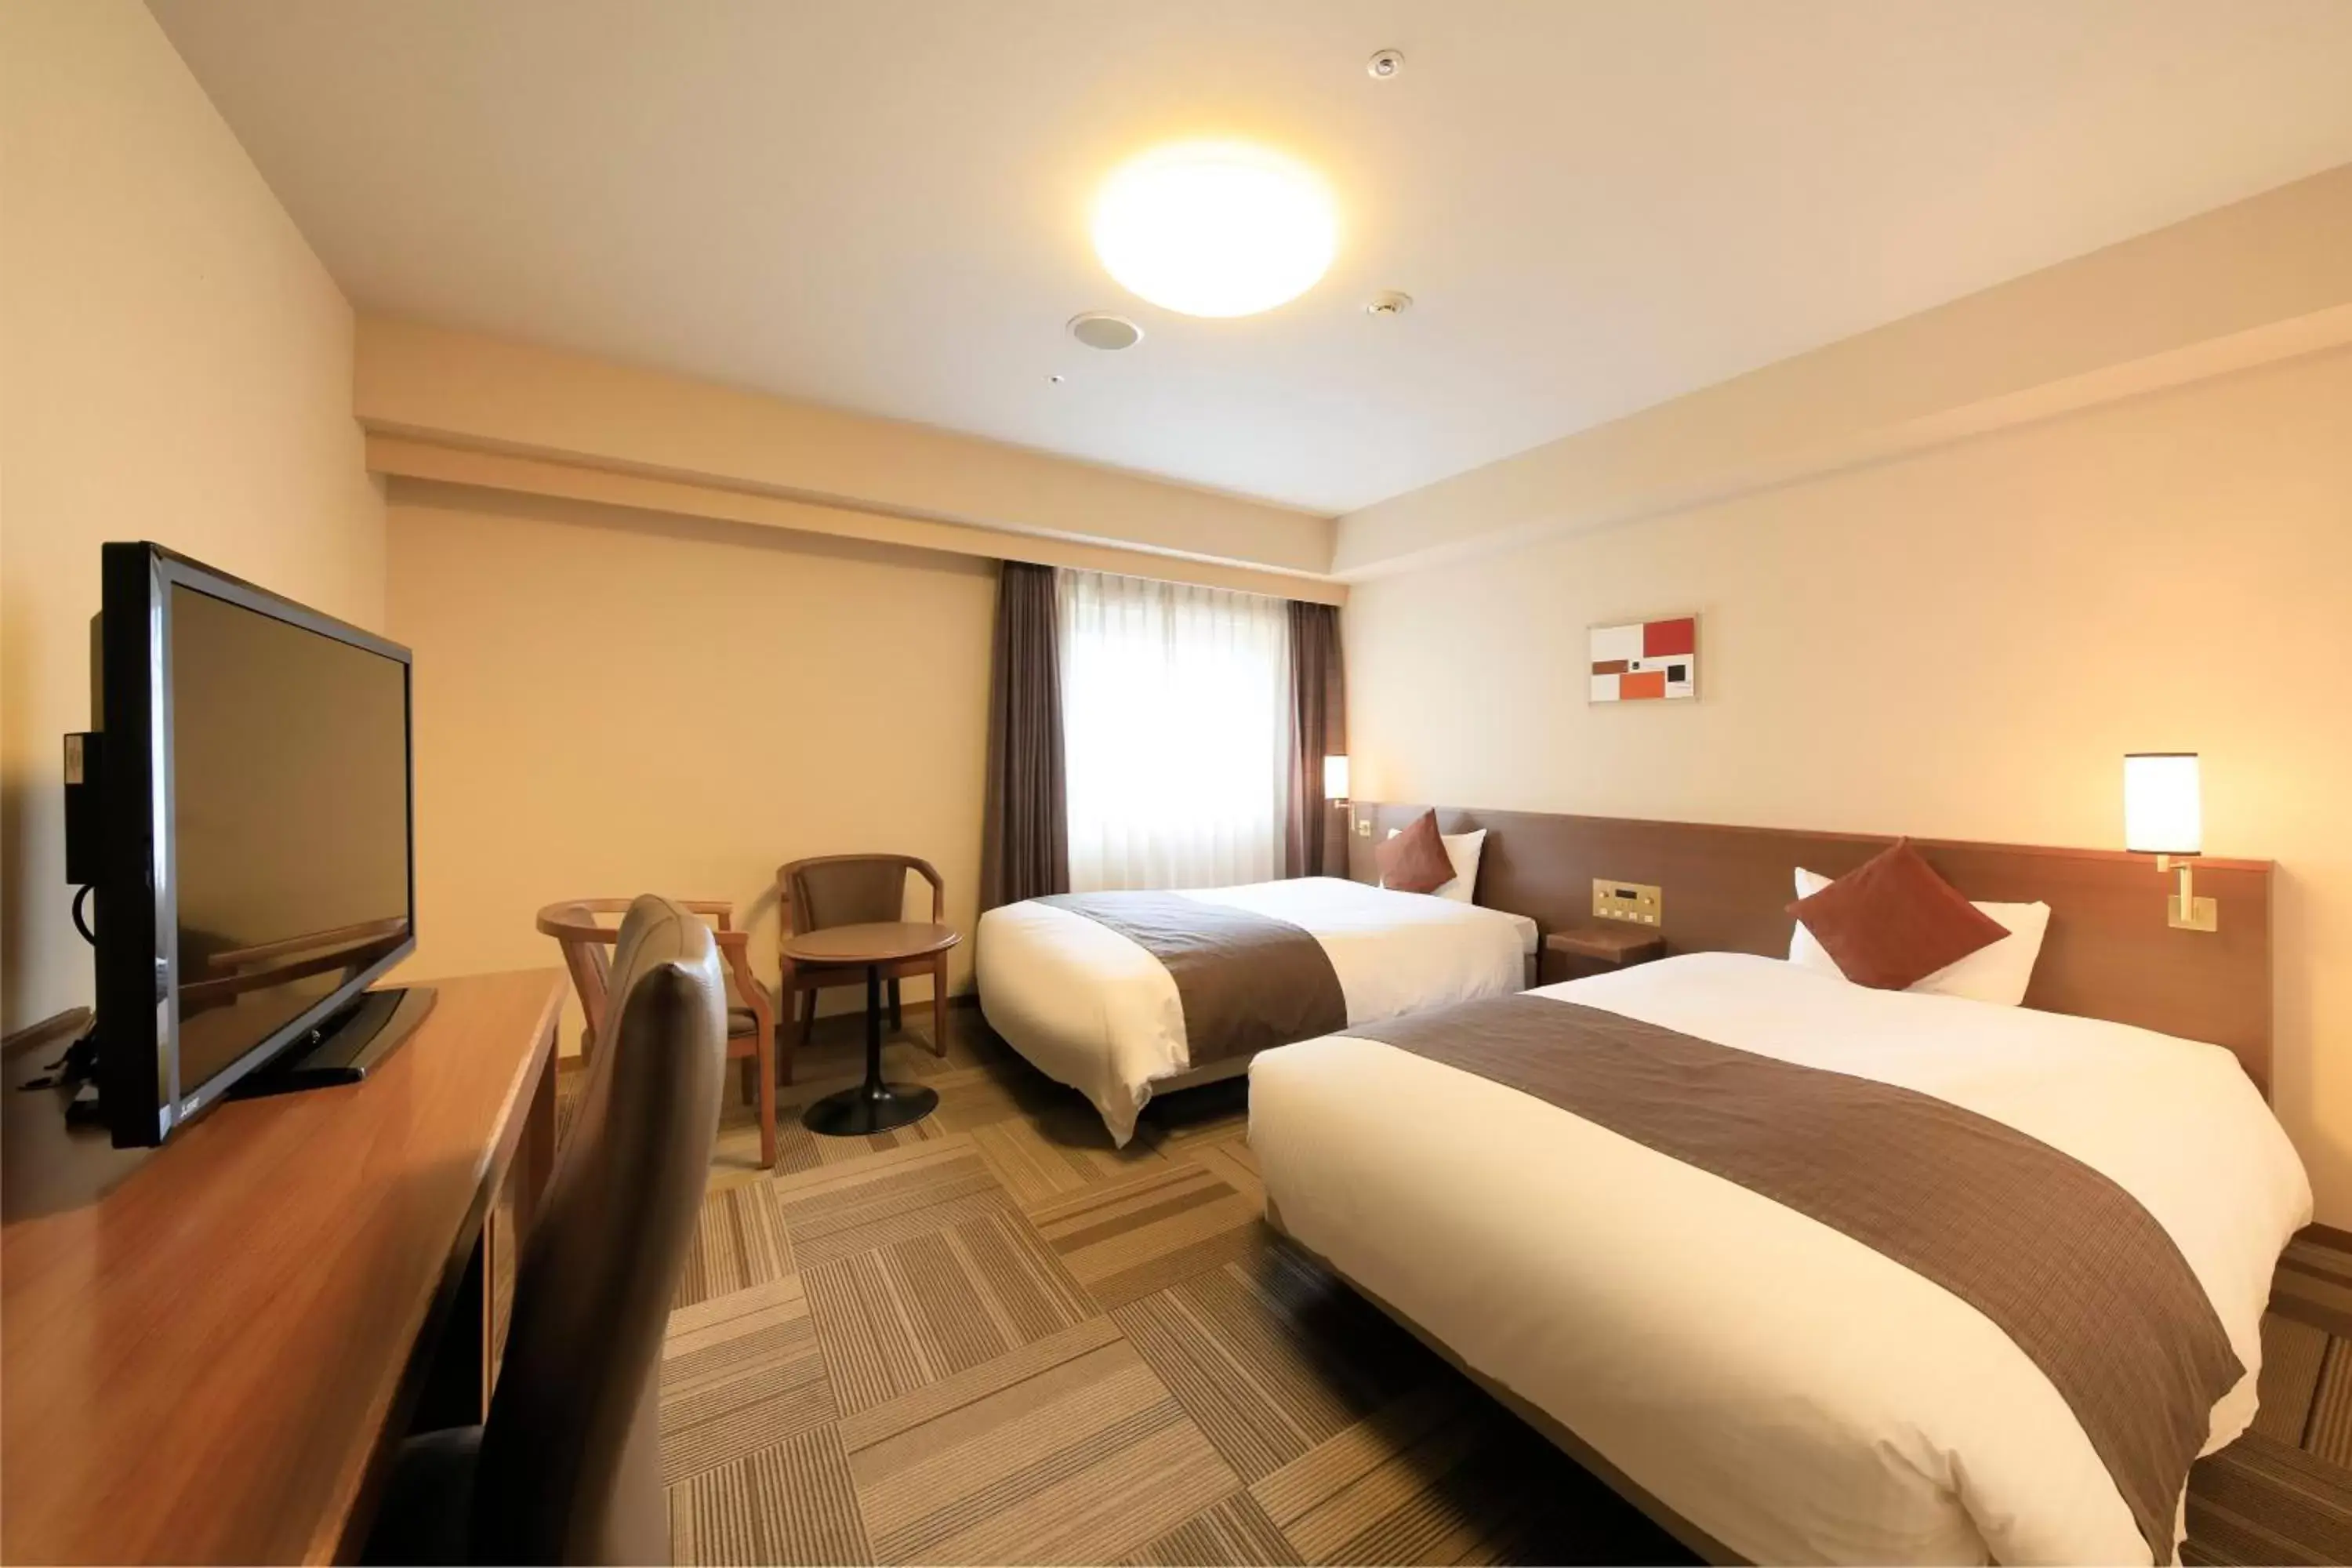 Bed, Room Photo in Daiwa Roynet Hotel Hachinohe